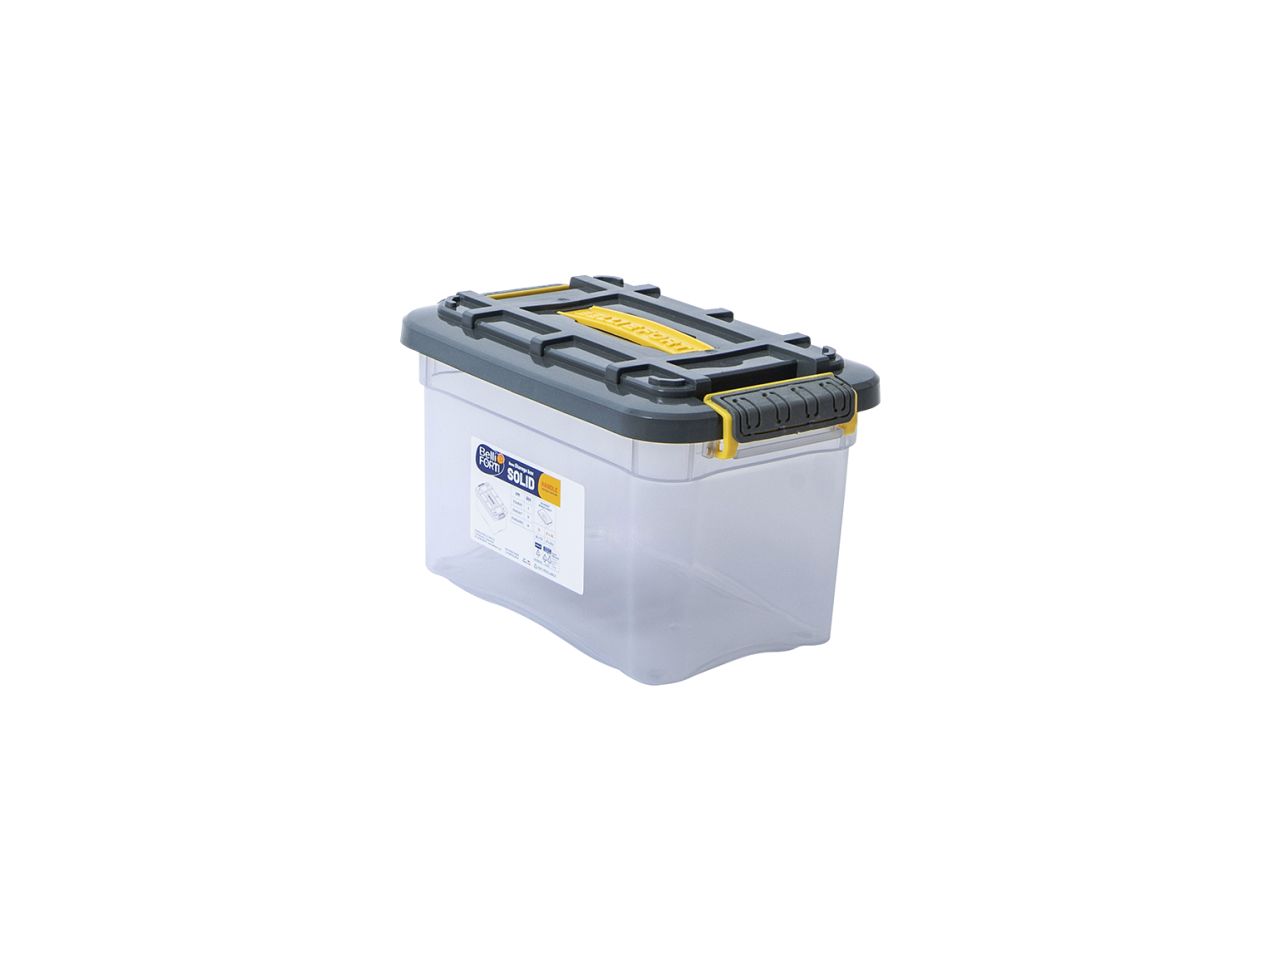 Storage box solid handle capacita' 5l misura 260x175x150mm colore grigio